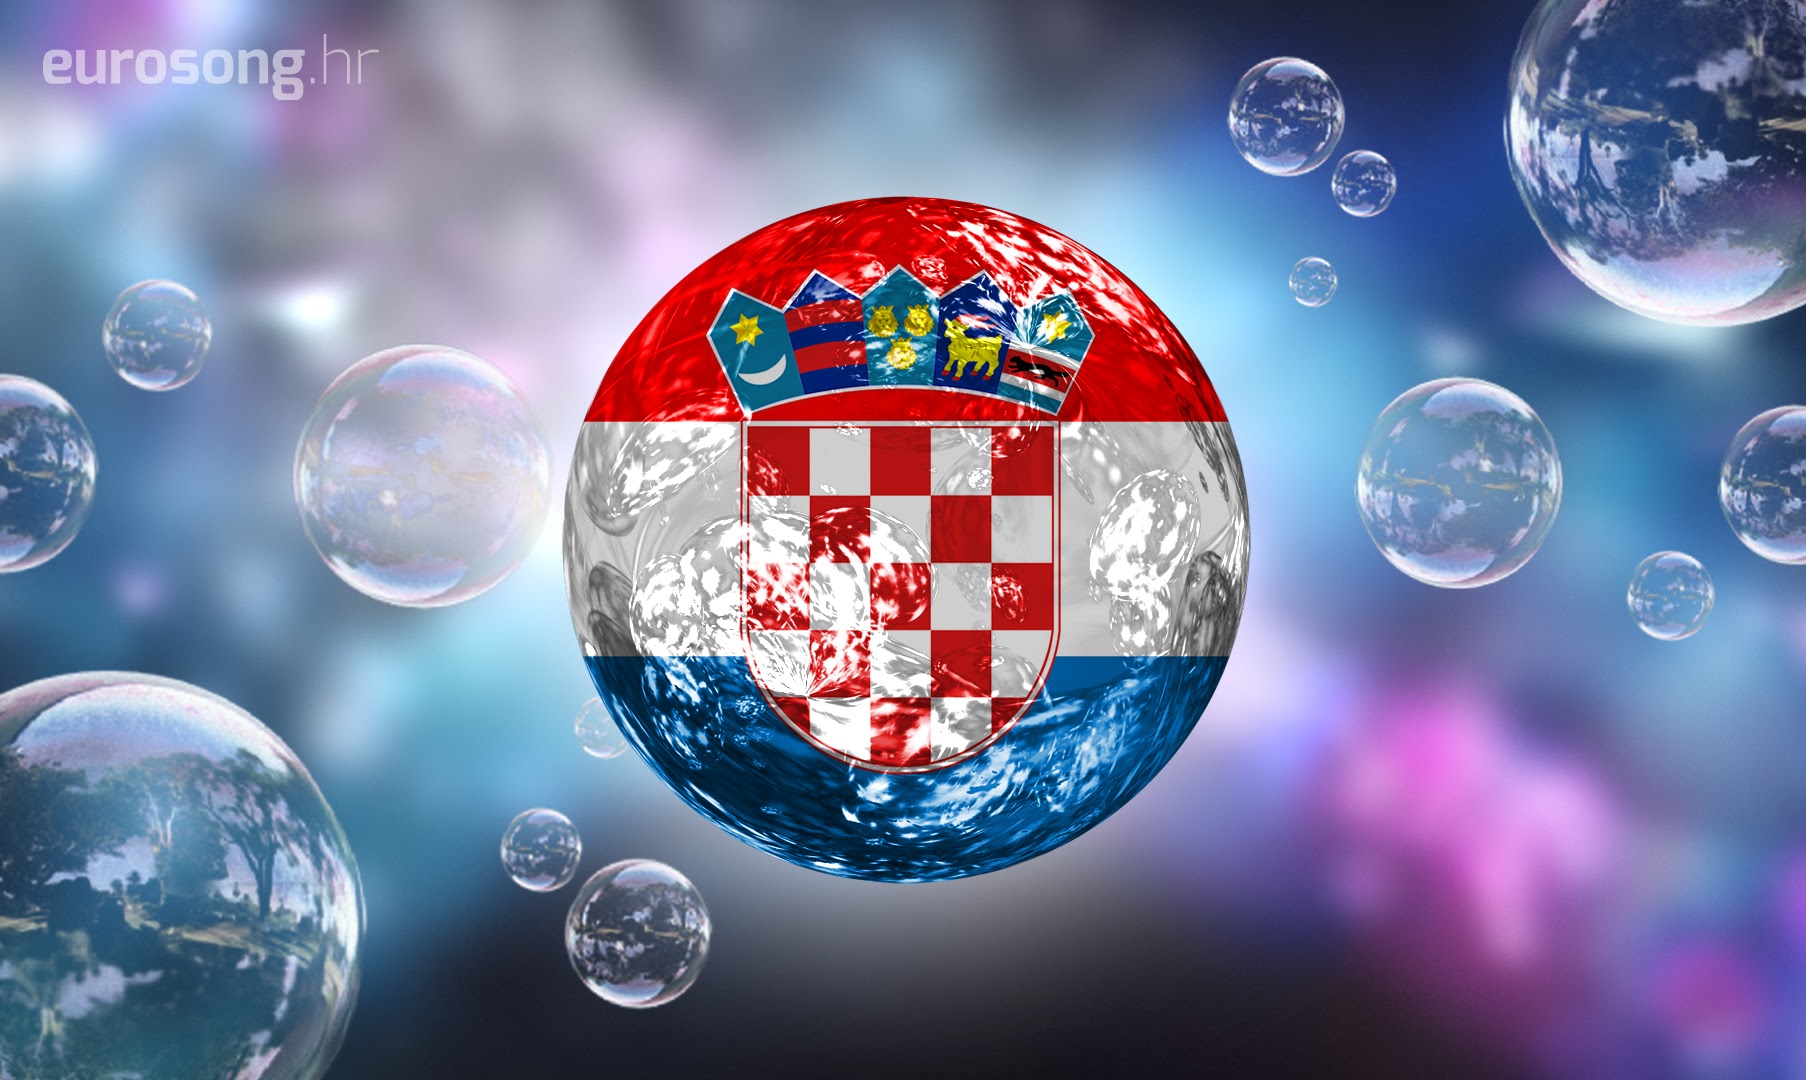 Hrvatska-Croatia